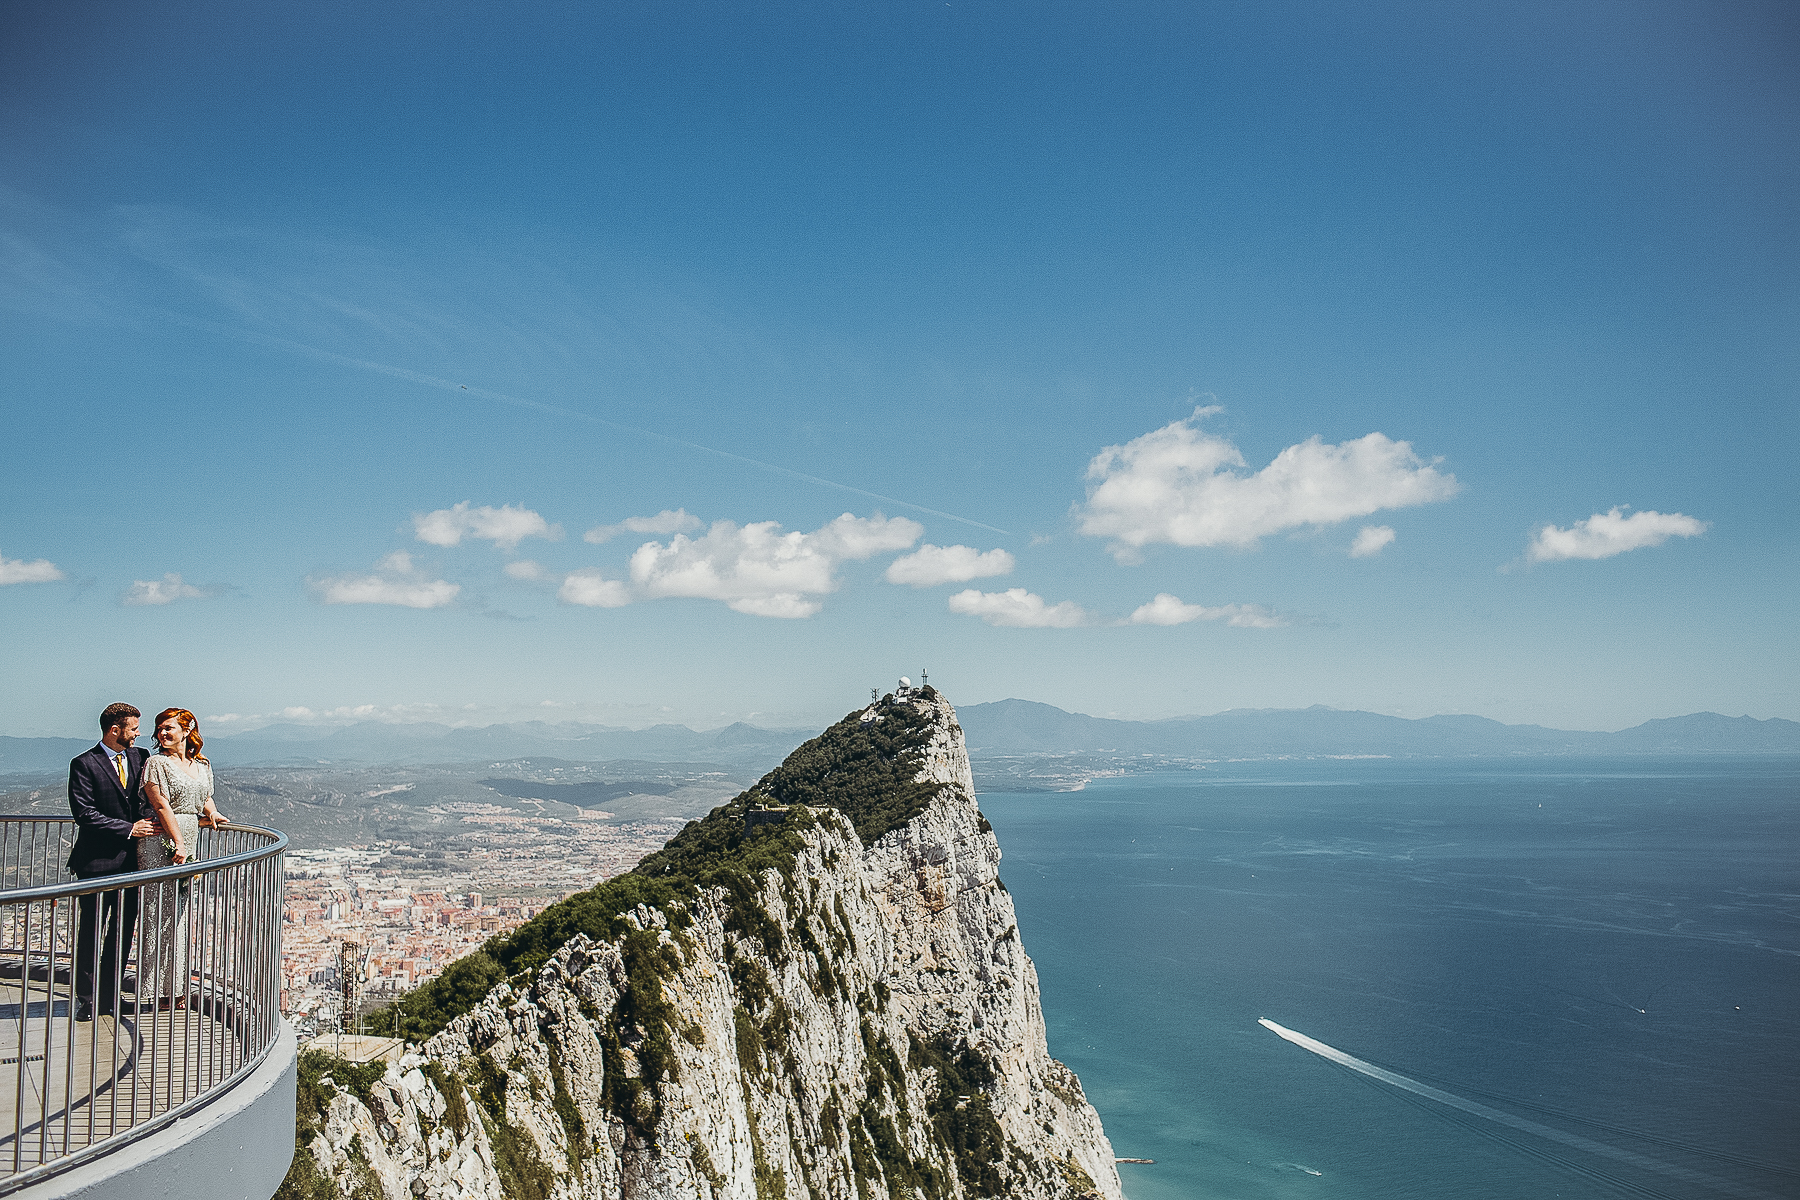 Top of the Rock Gibraltar